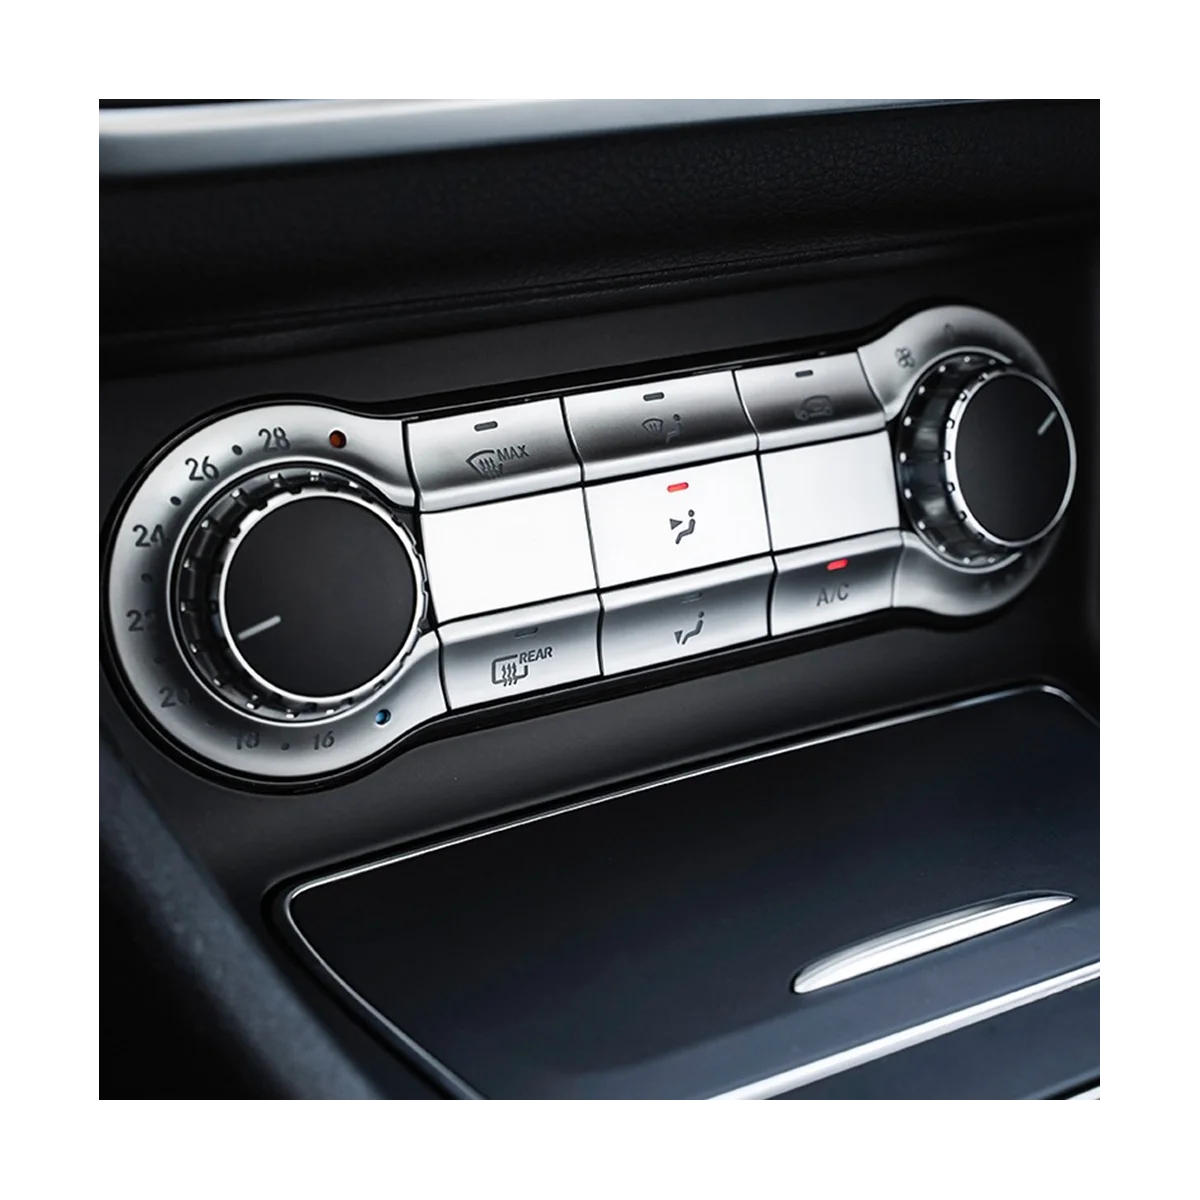 

Car Center Console Air Conditioning Button Sticker Trim for Mercedes Benz CLA C117 GLA X156 a B Class W176 W246